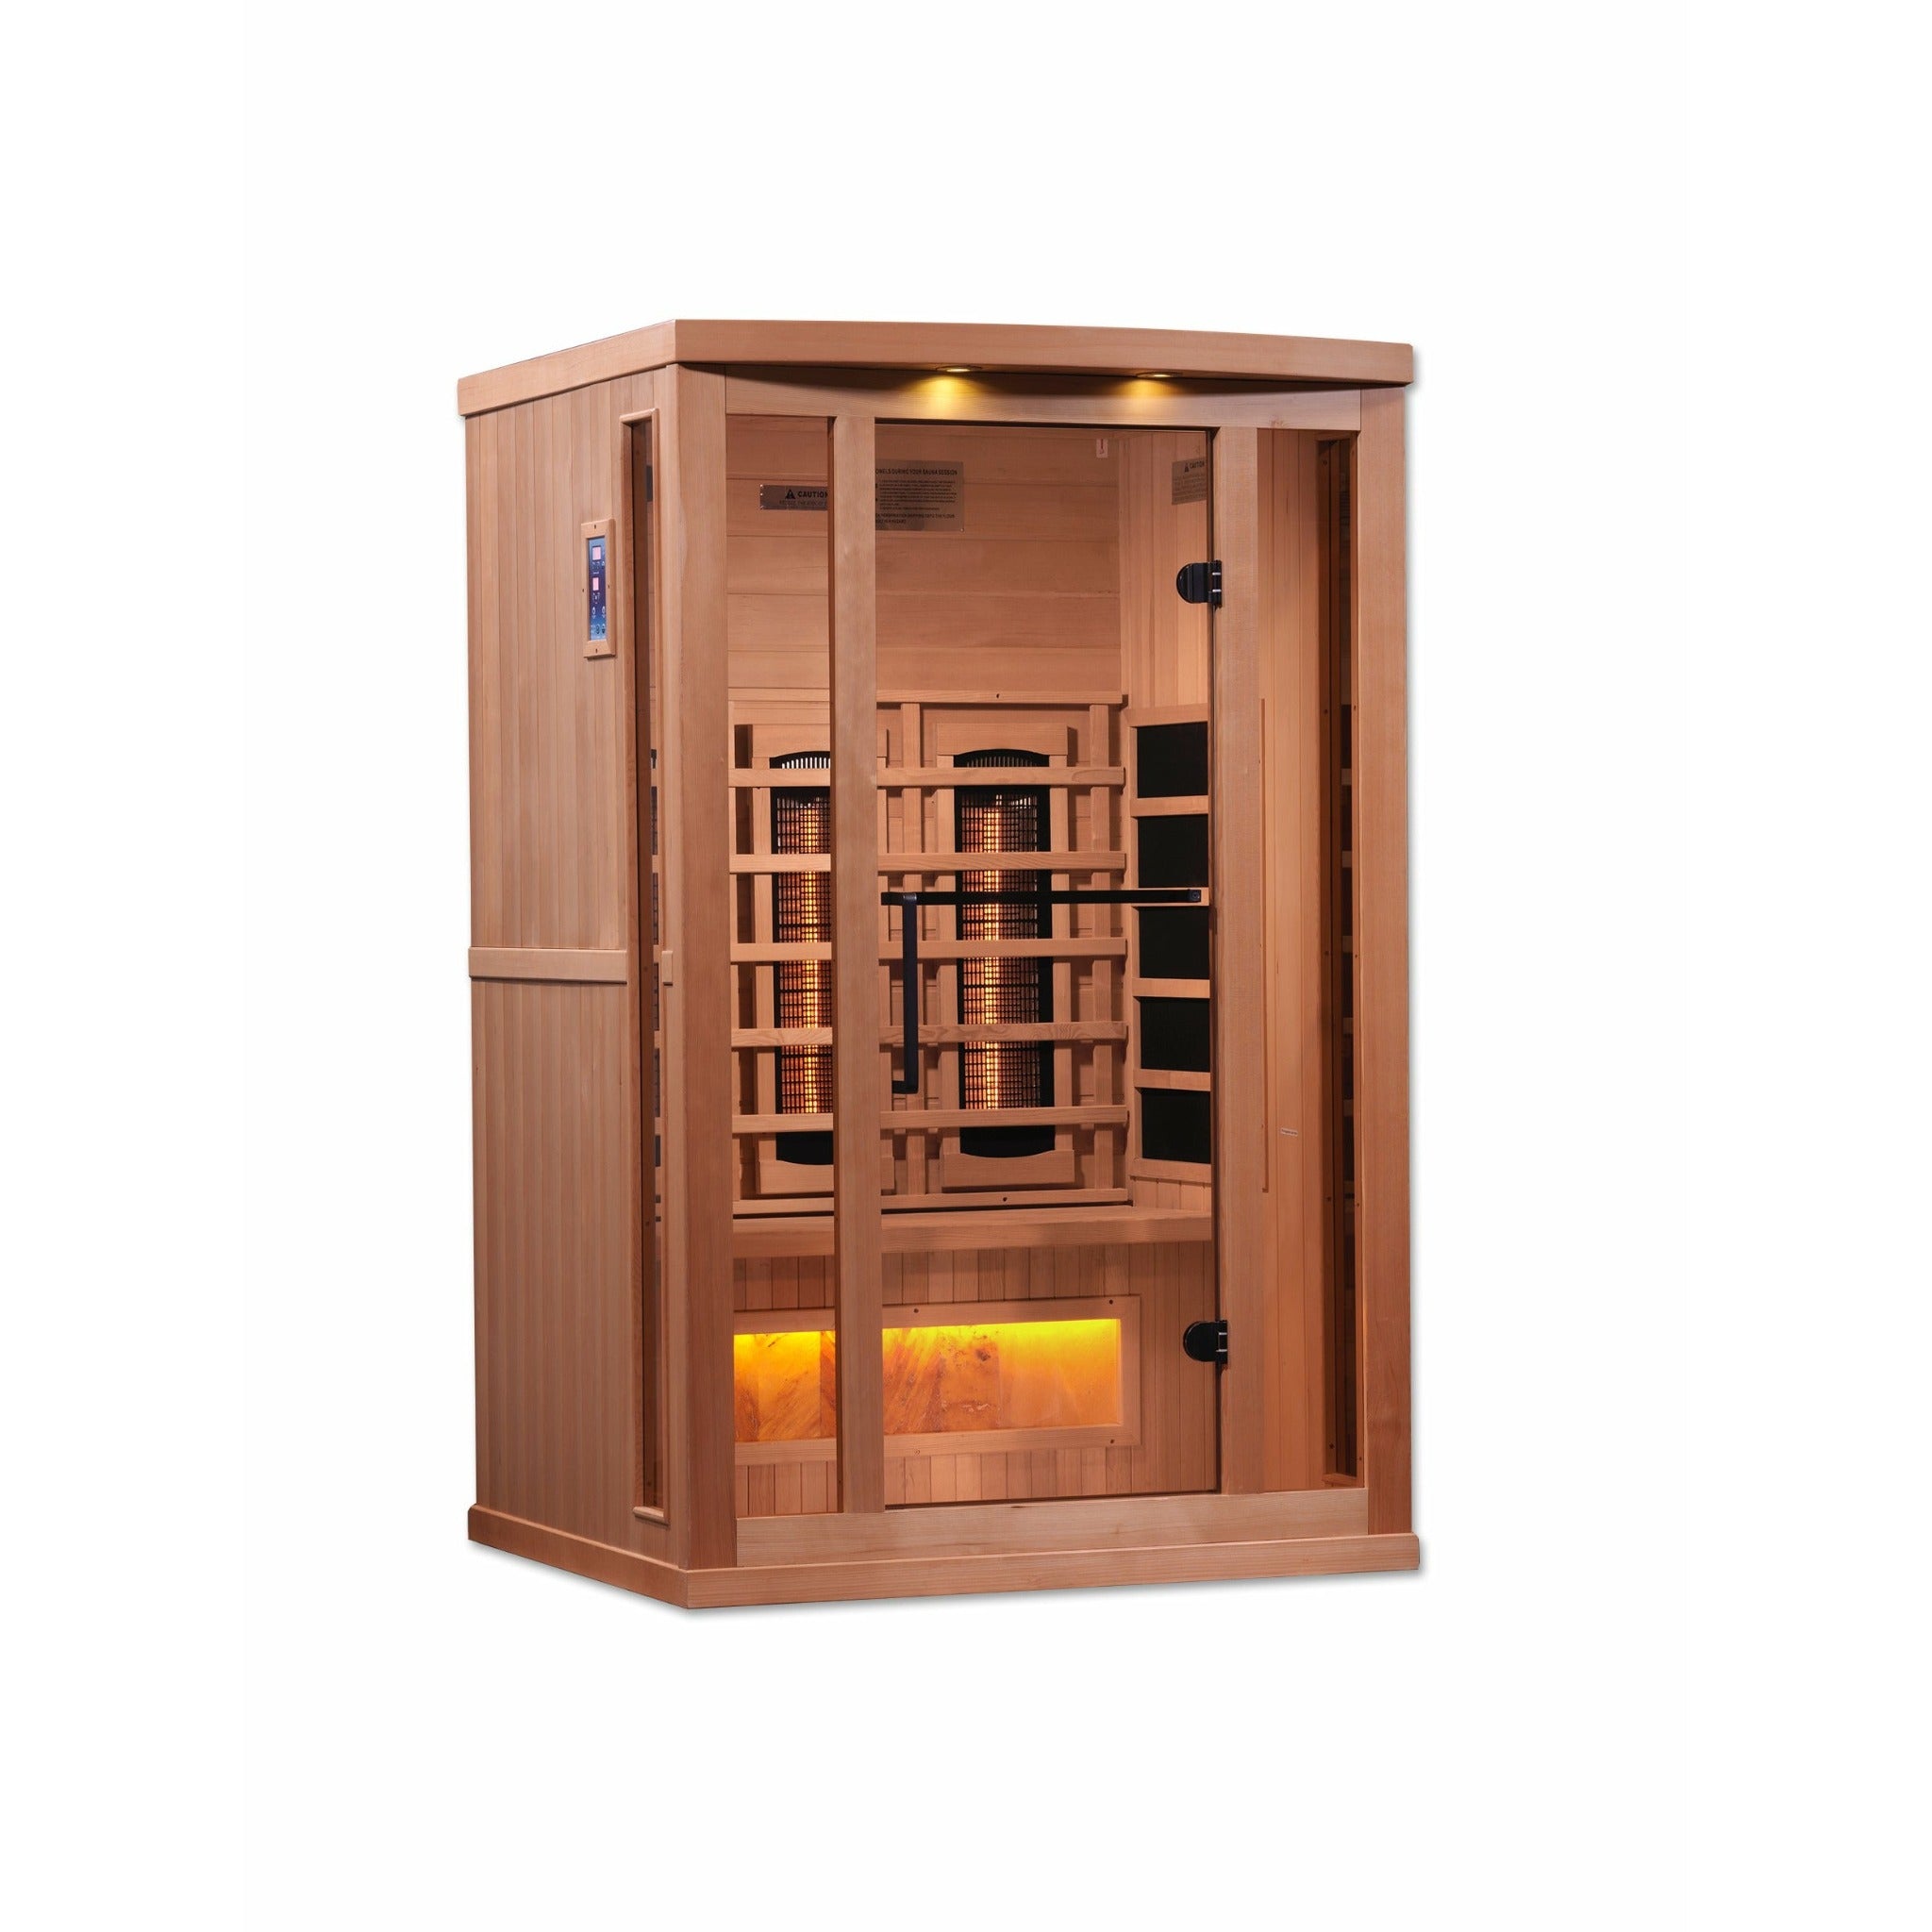 Golden Design Saunas Reserve Edition GDI-8020-02 Full Spectrum with Hi